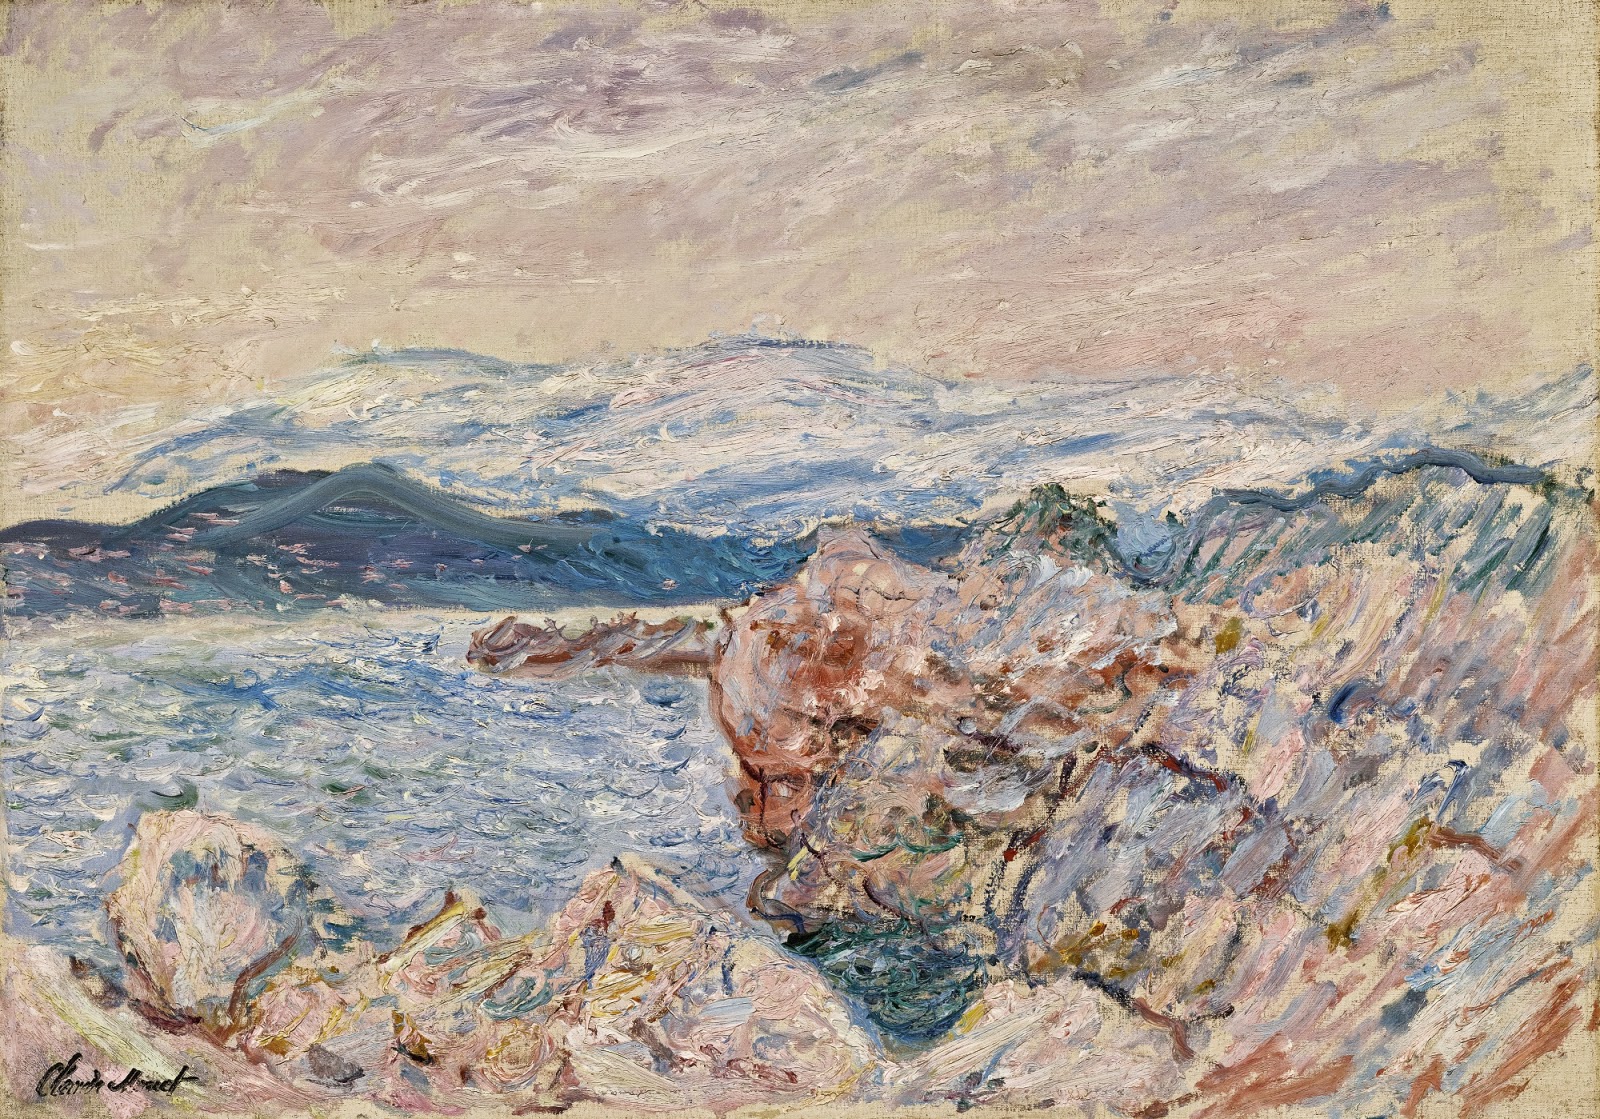 Claude+Monet-1840-1926 (500).jpg